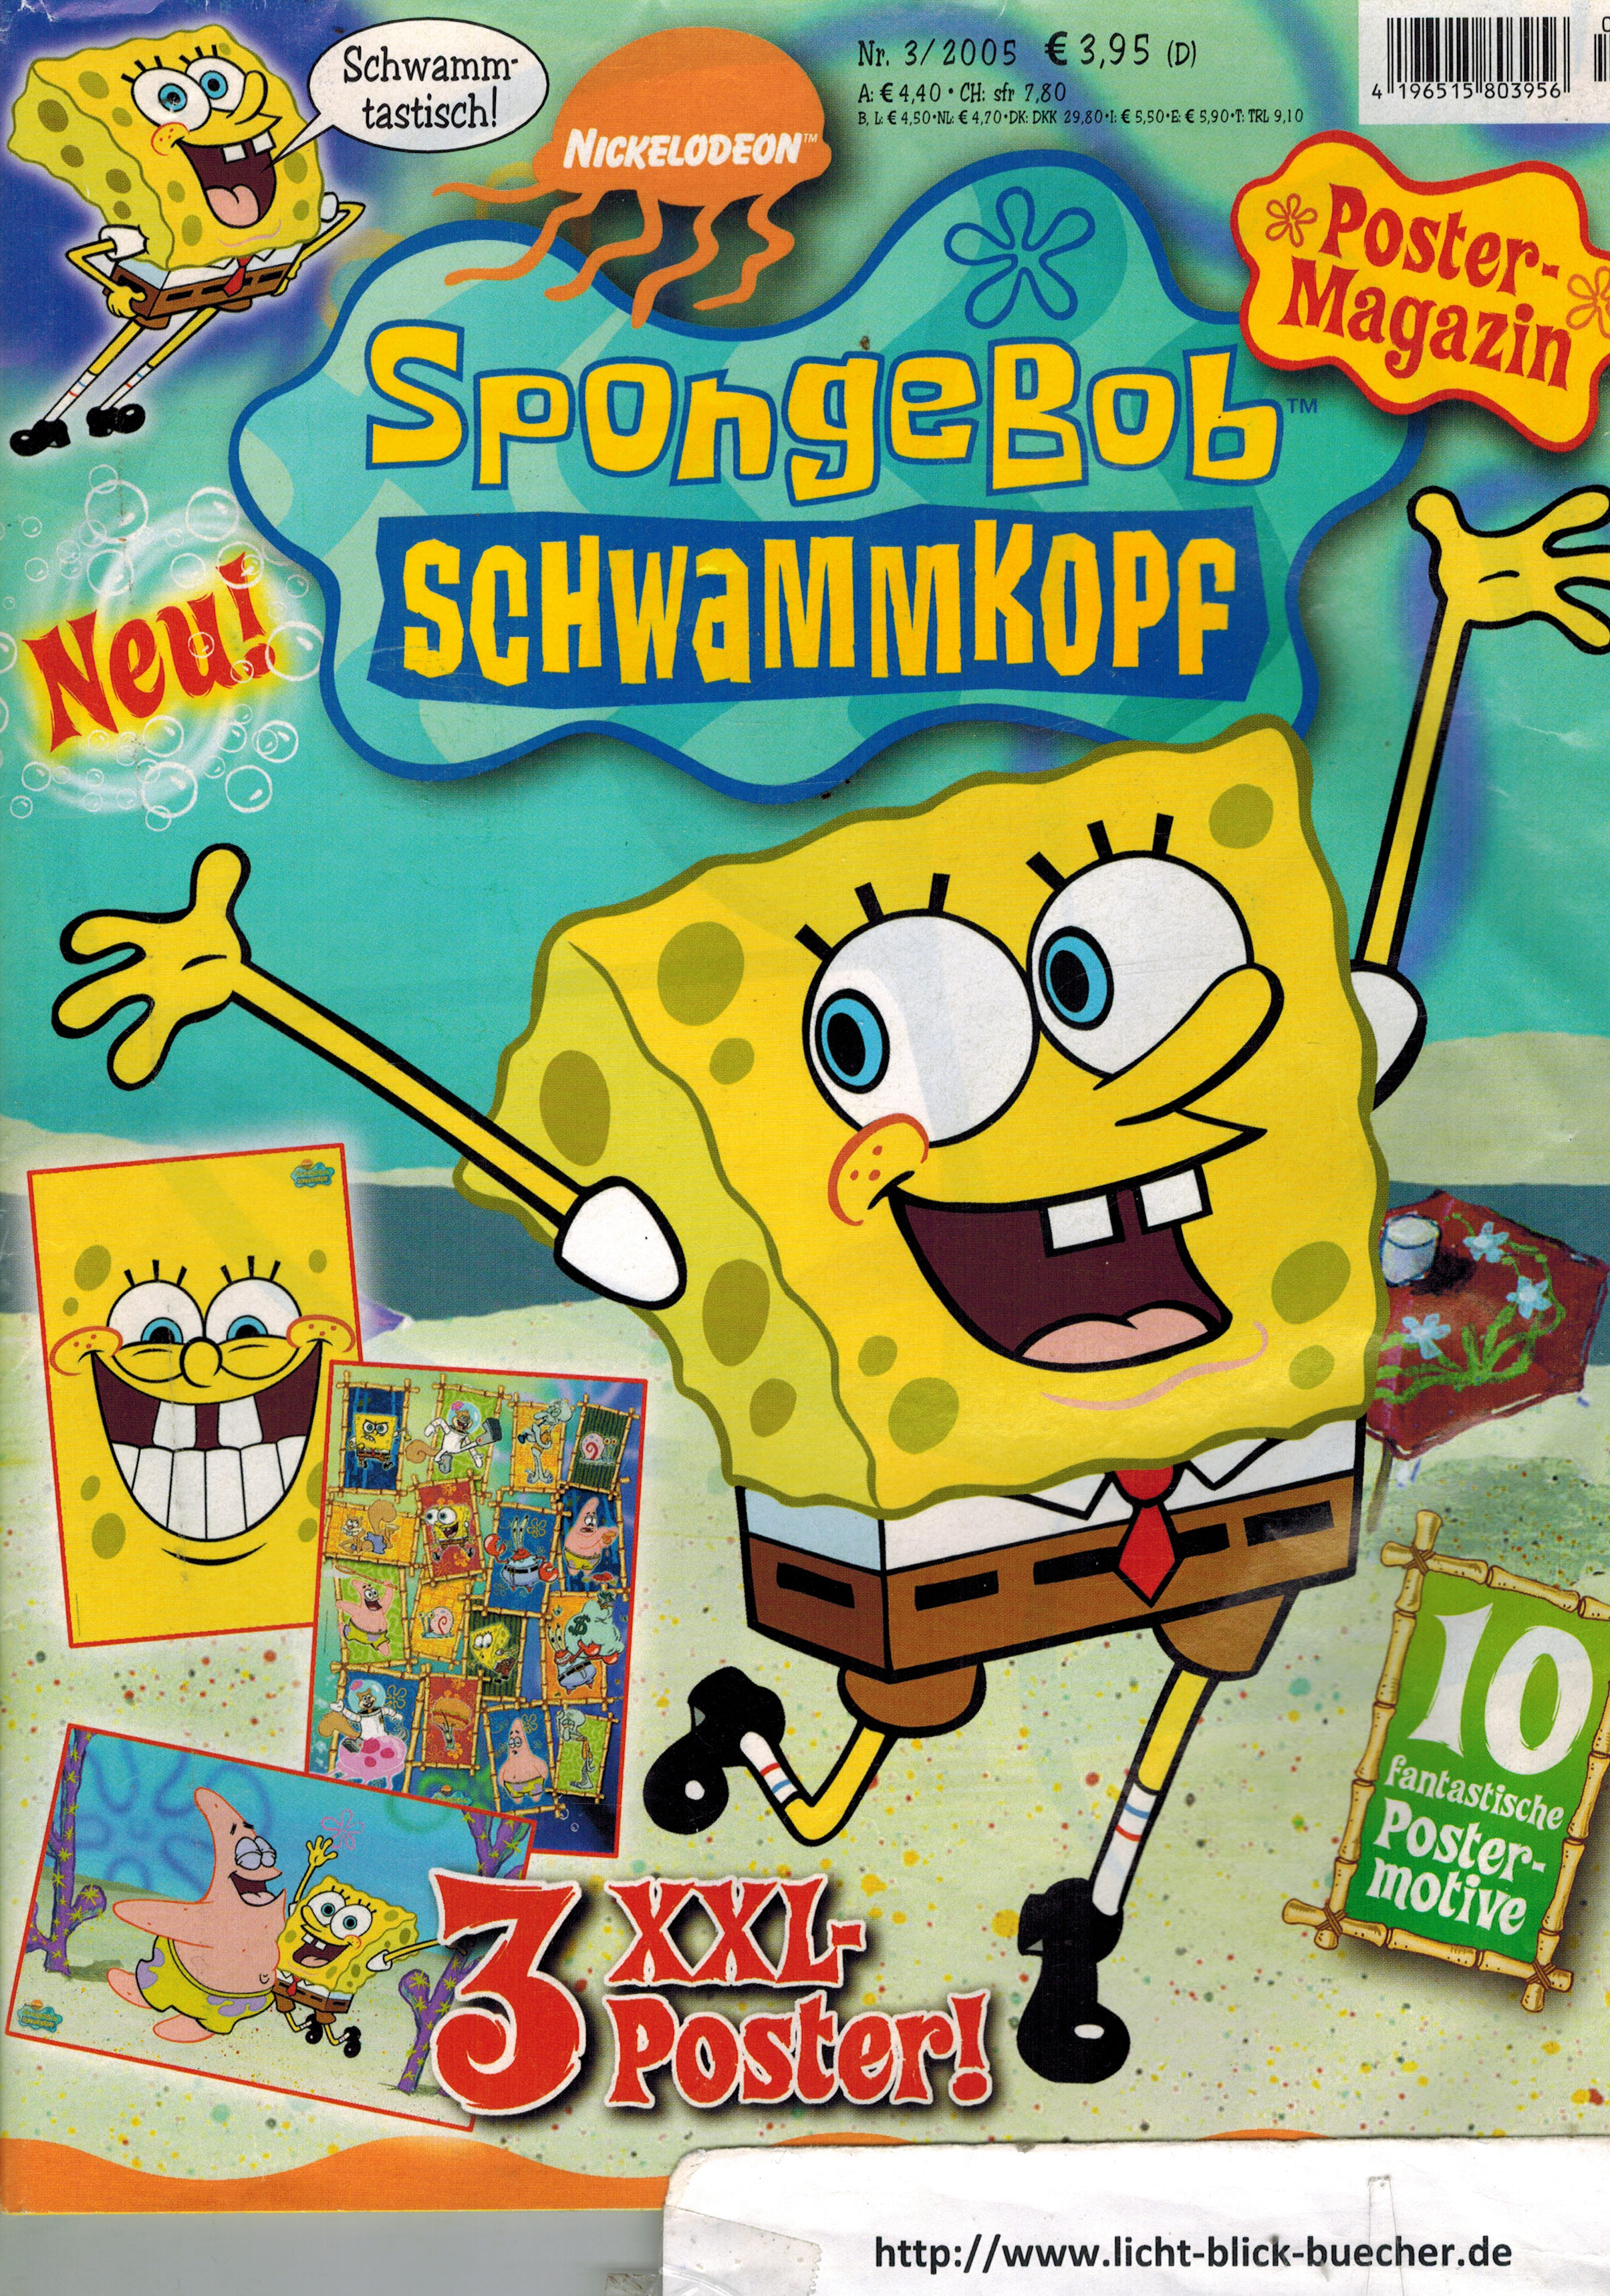 Spongebob Schwammkopf PostermagazinNr.3/2005